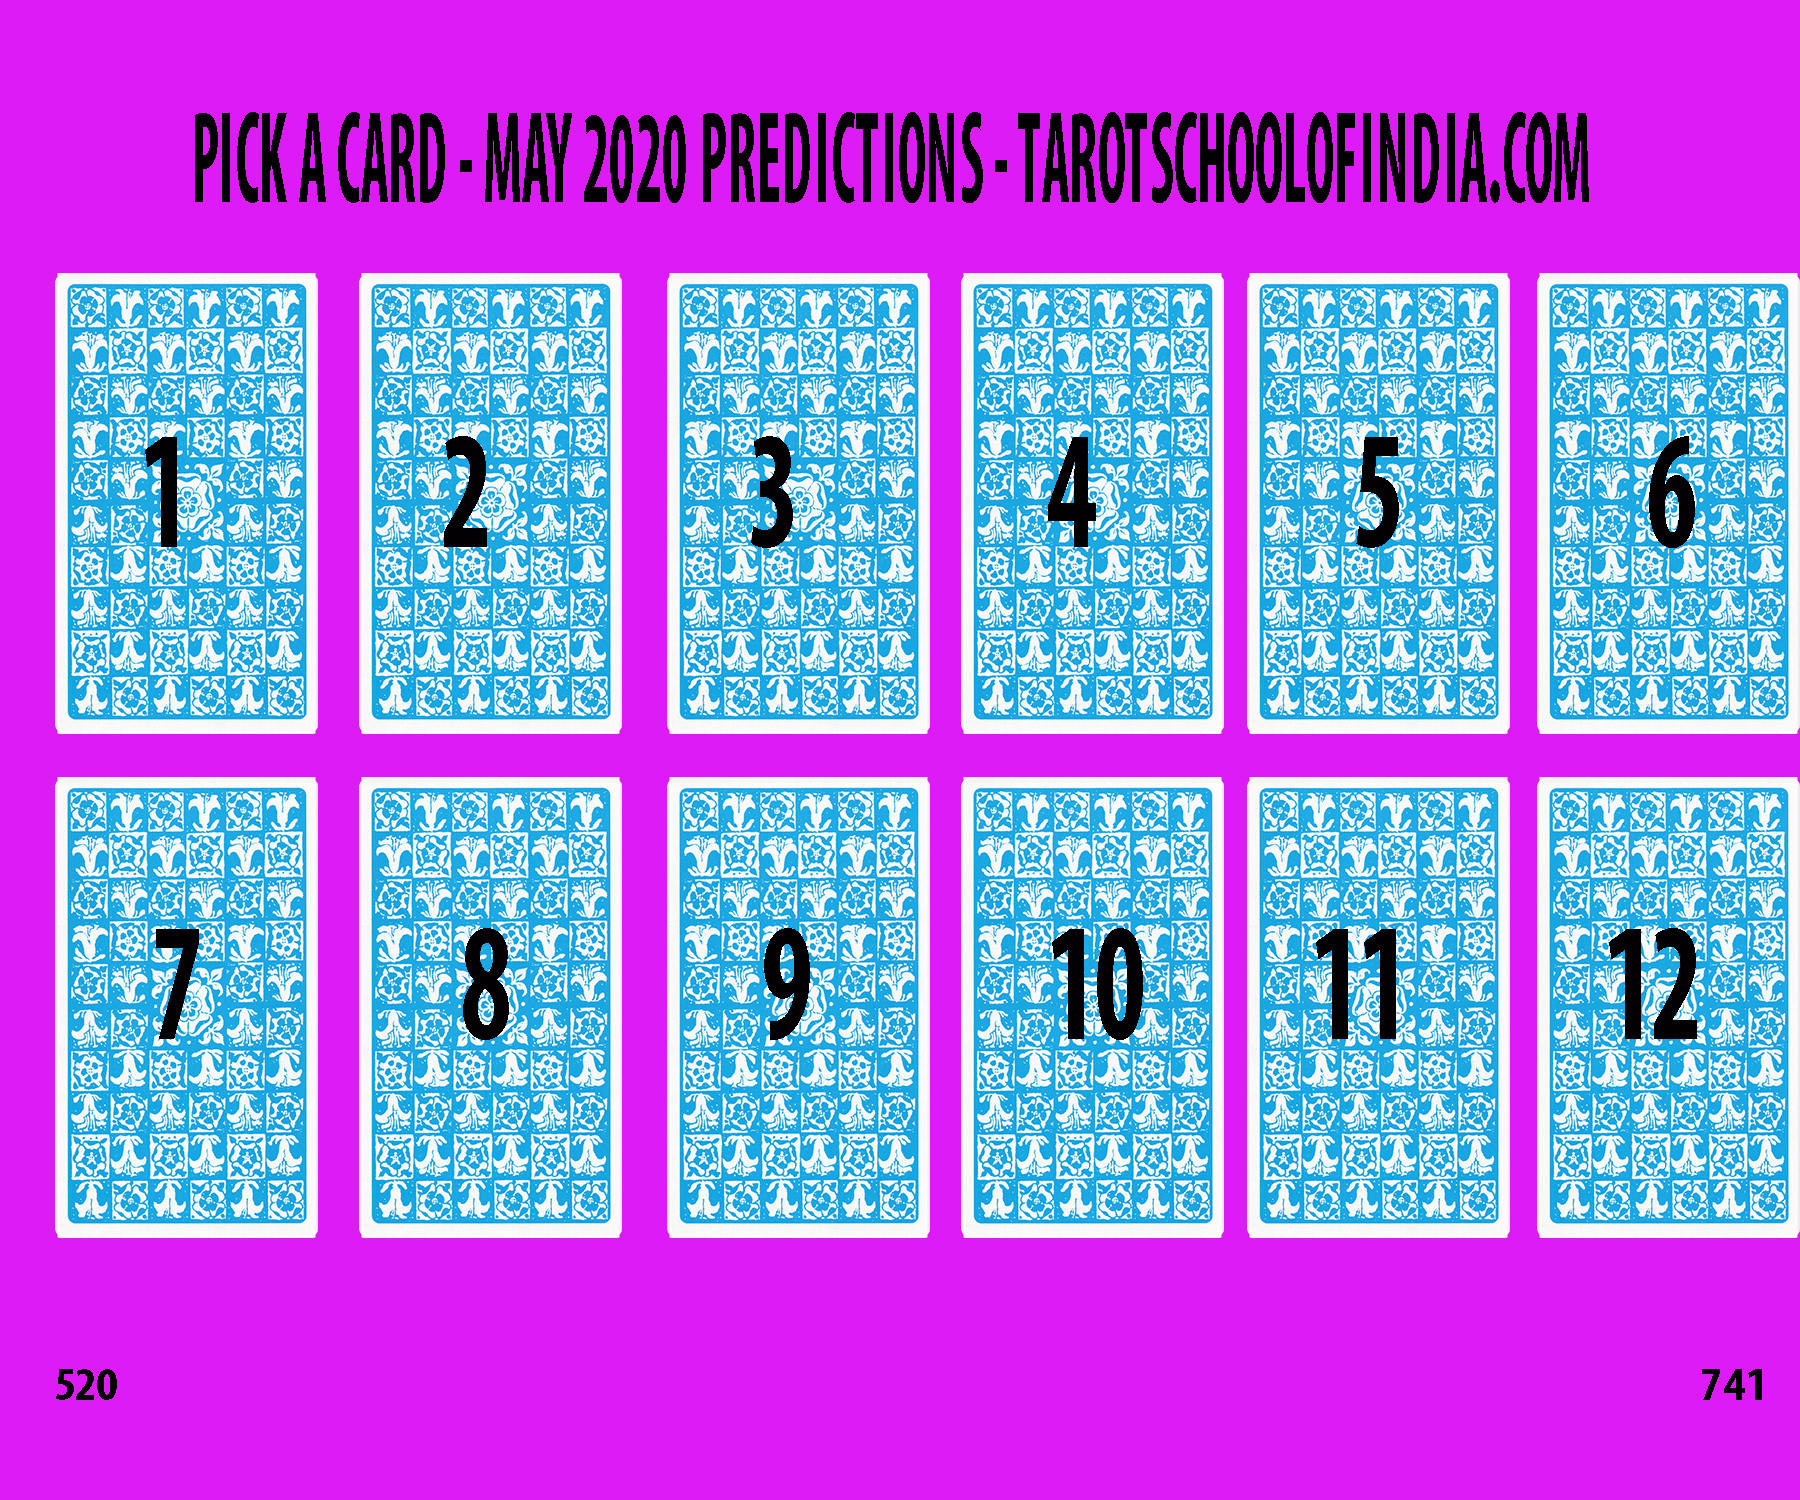 Image Showing Pick a card - May 2020 predictions